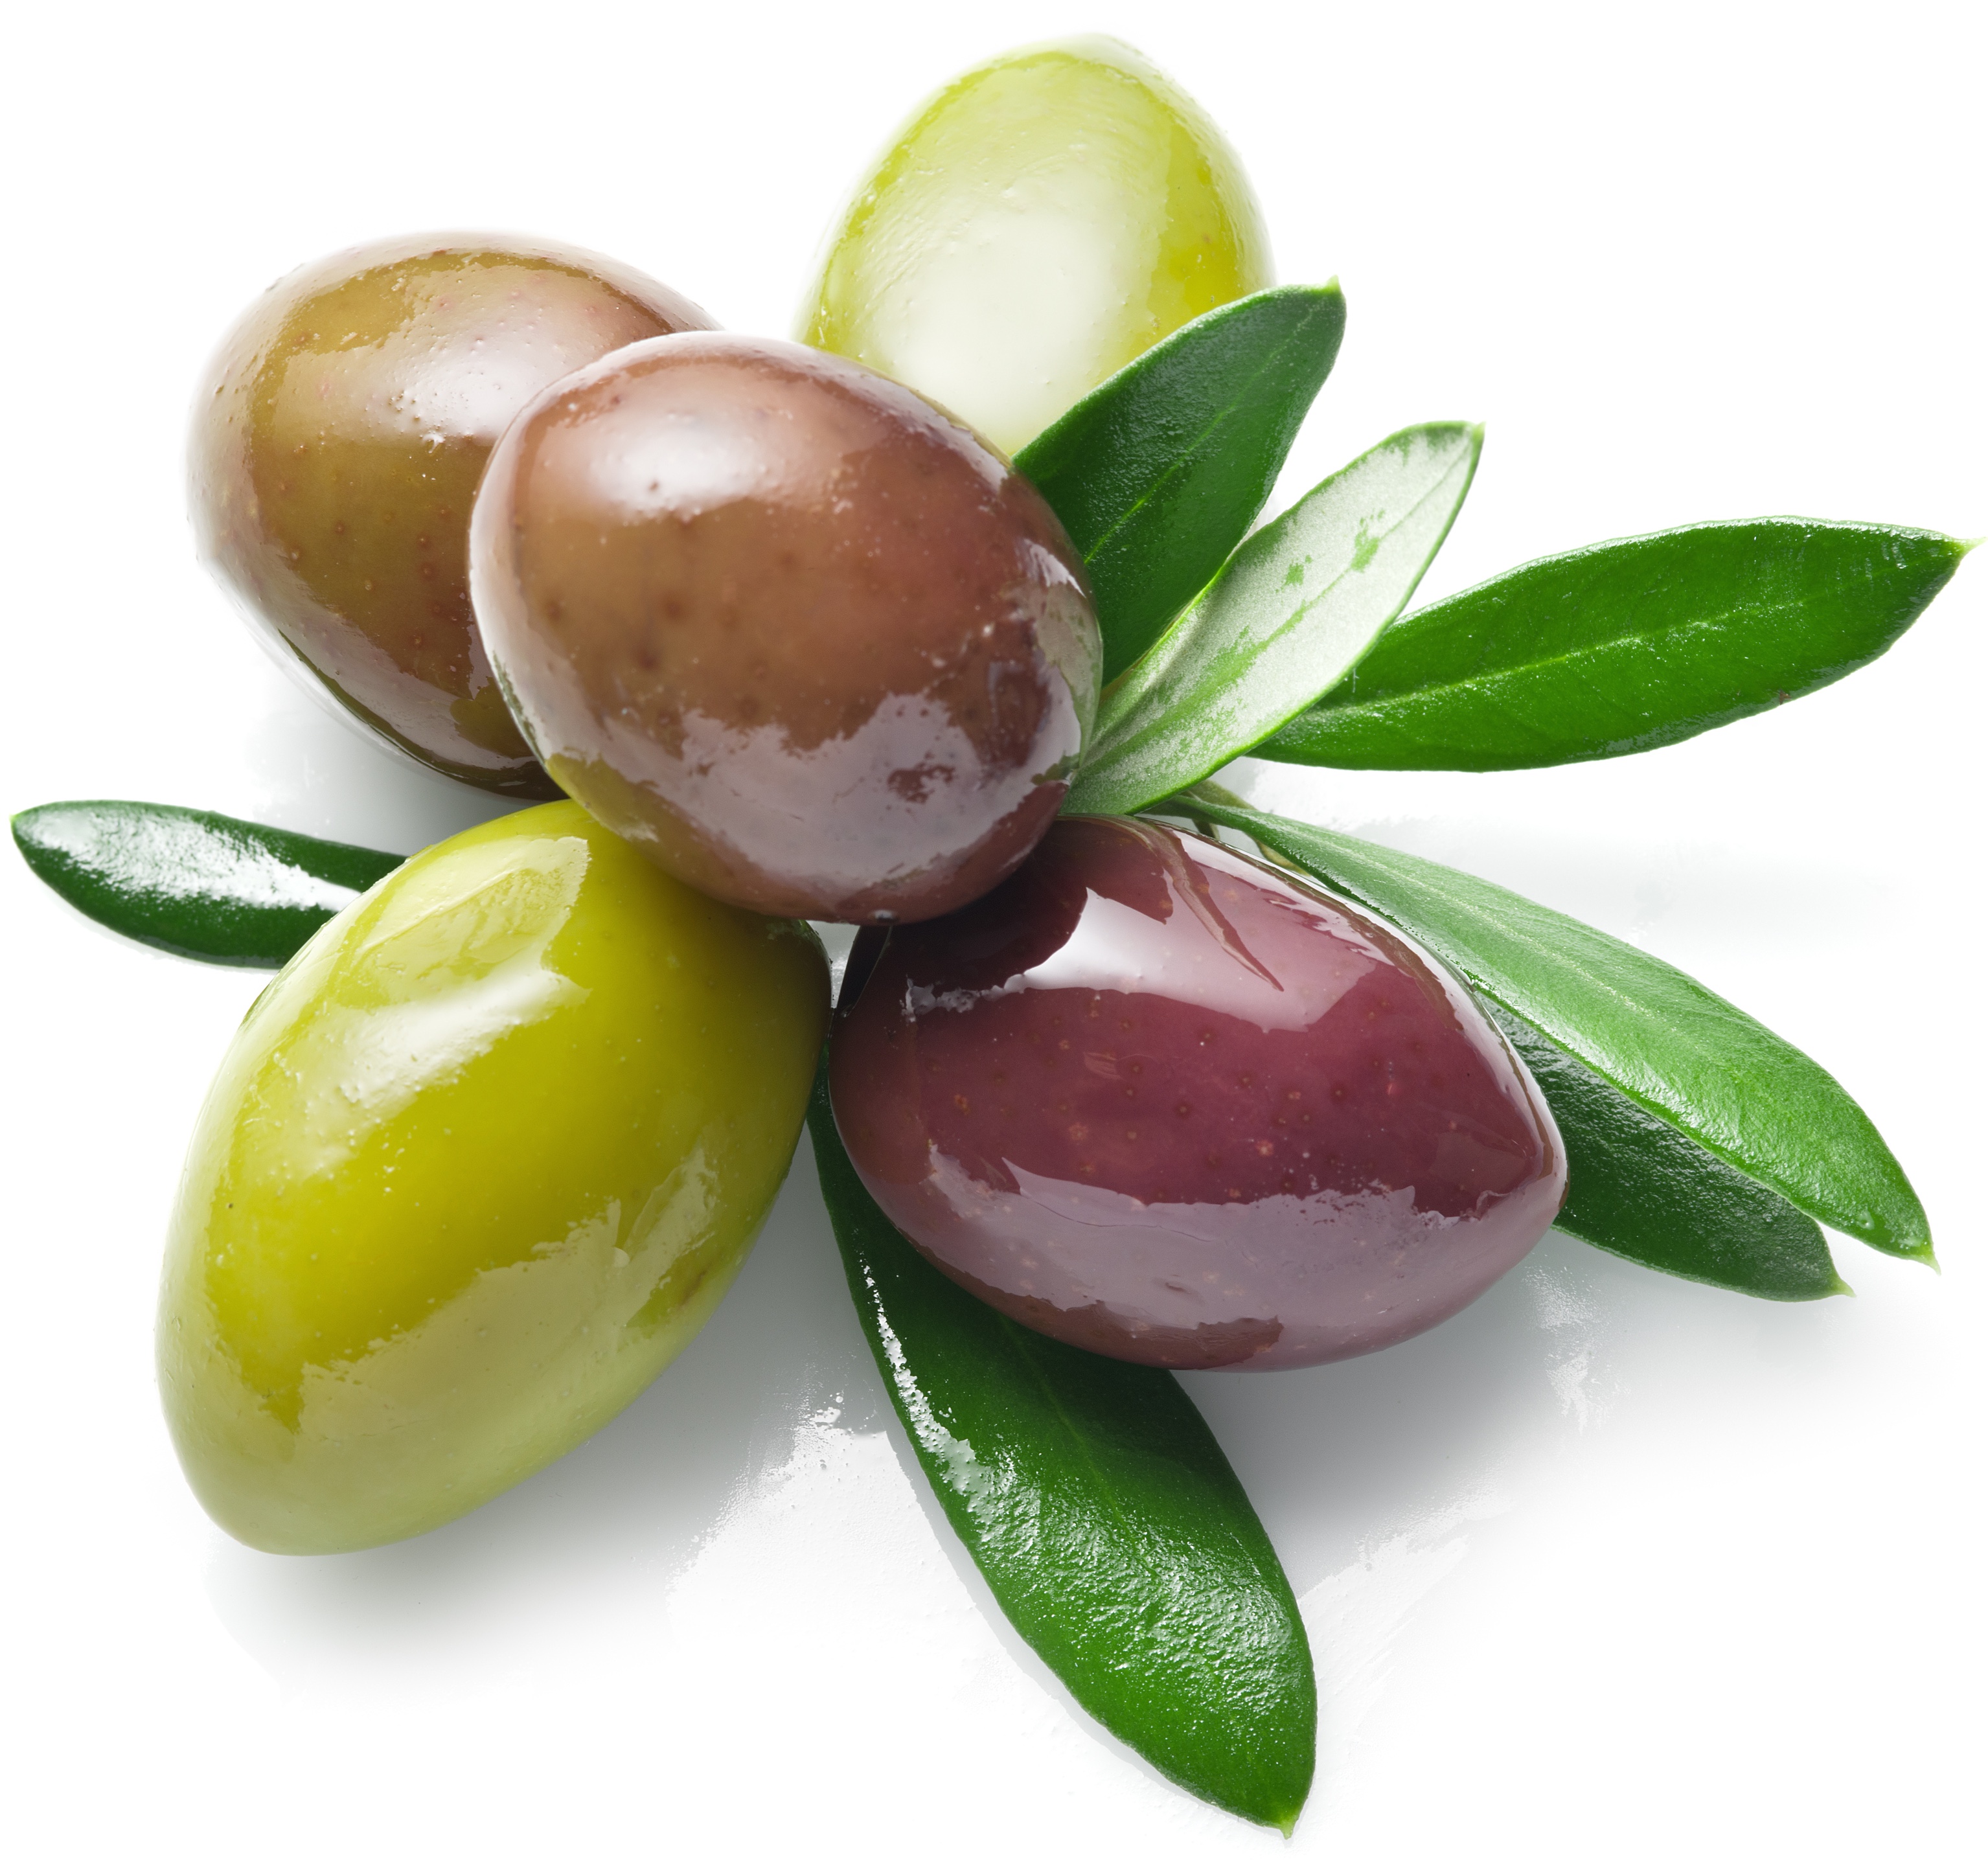 Extra Virgin Olive Oil org - Bulk per oz - The Farmacy